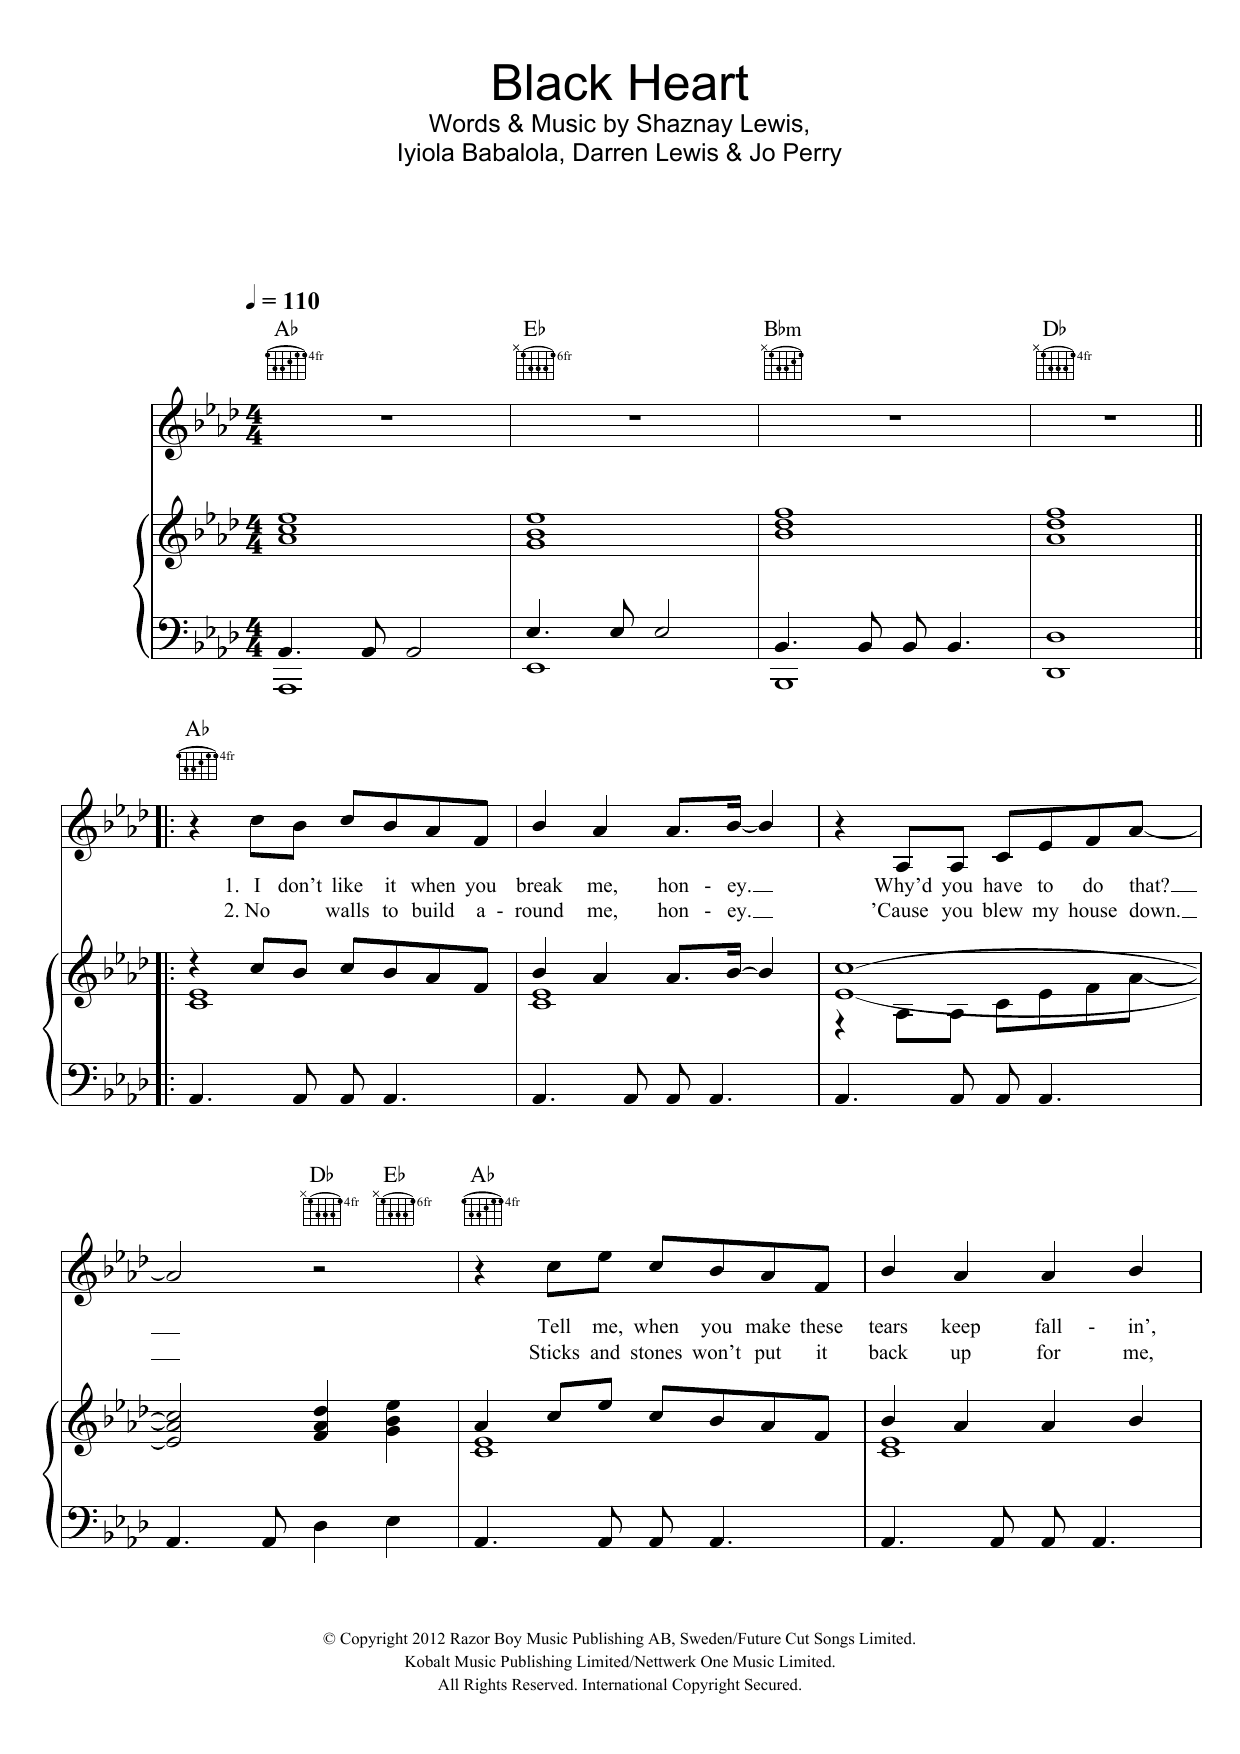 Stooshe Black Heart Sheet Music Notes & Chords for Keyboard - Download or Print PDF